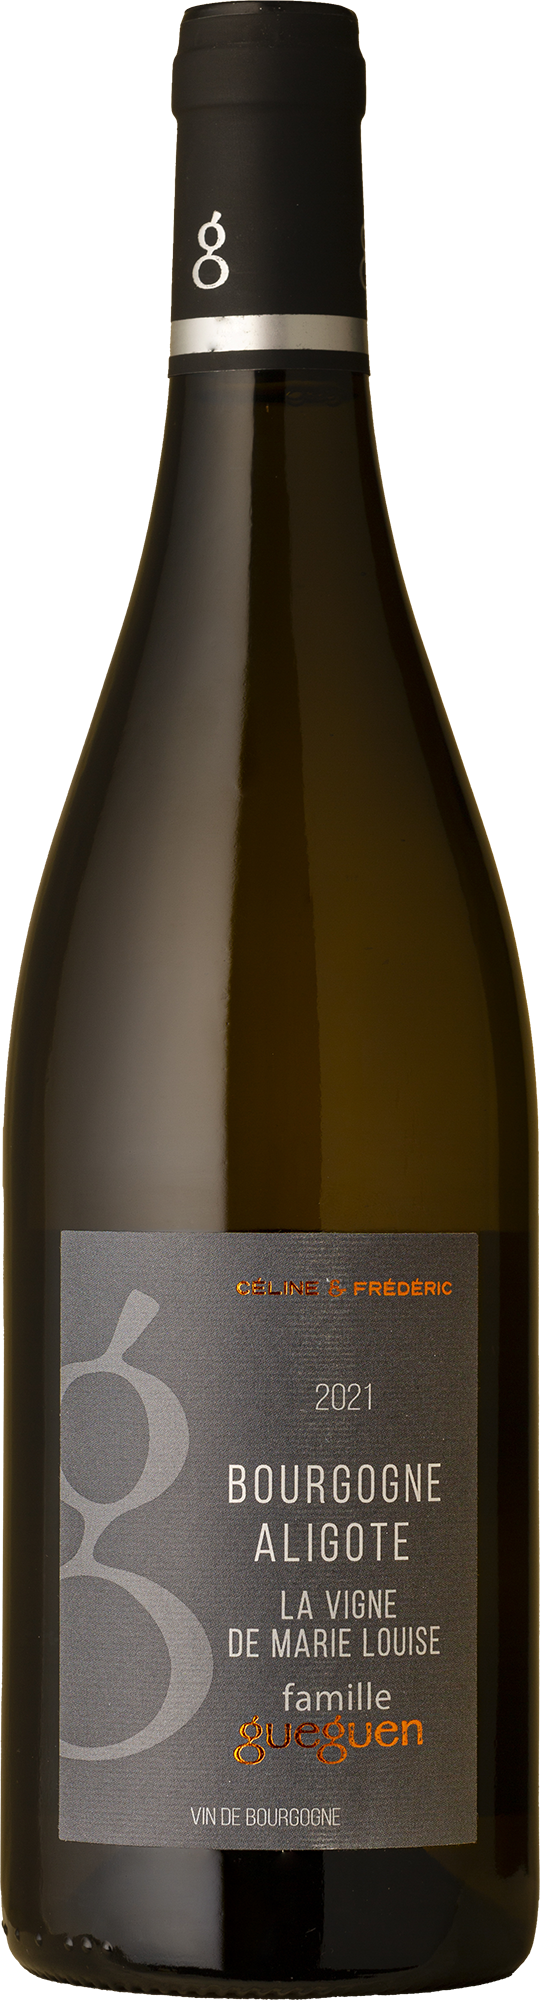 Domaine Gueguen - Bourgogne Aligoté 2021 White Wine